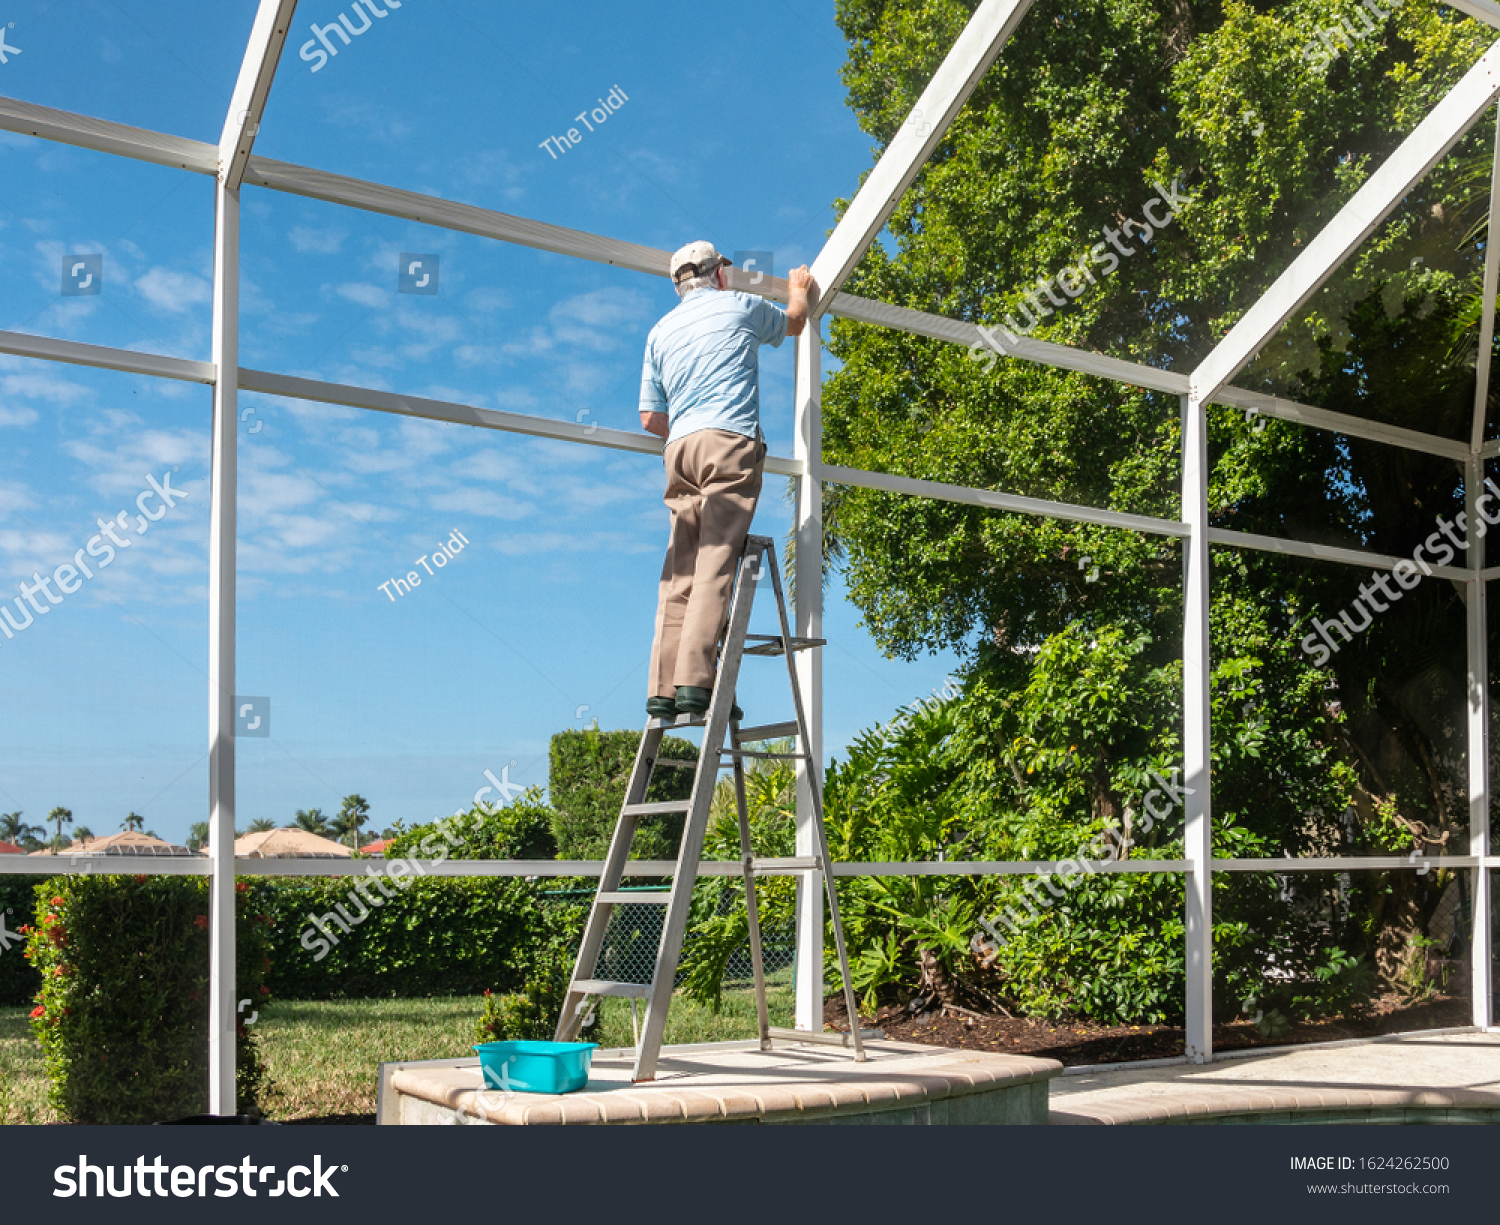 Handyman on ladder cleaning outdoor pool cage enclosure. Screened swimming pool lanai maintenance and screen repair. #1624262500